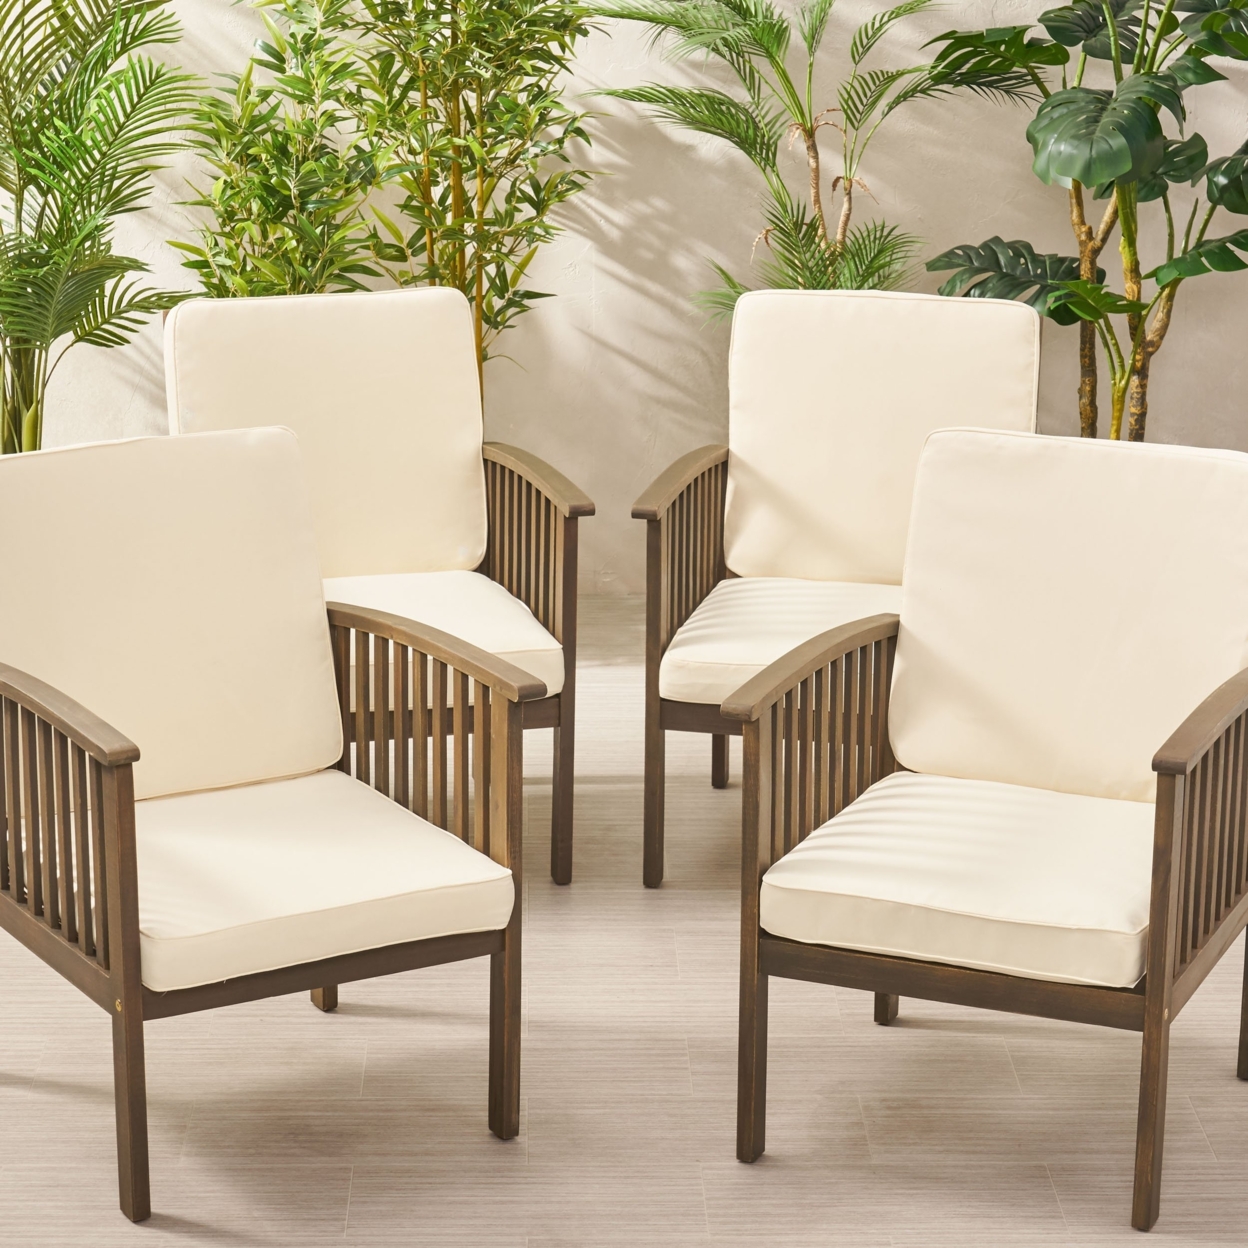 Eydan Outdoor Water Resistant Fabric Club Chair Cushions (Set Of 4) - Dark Teal